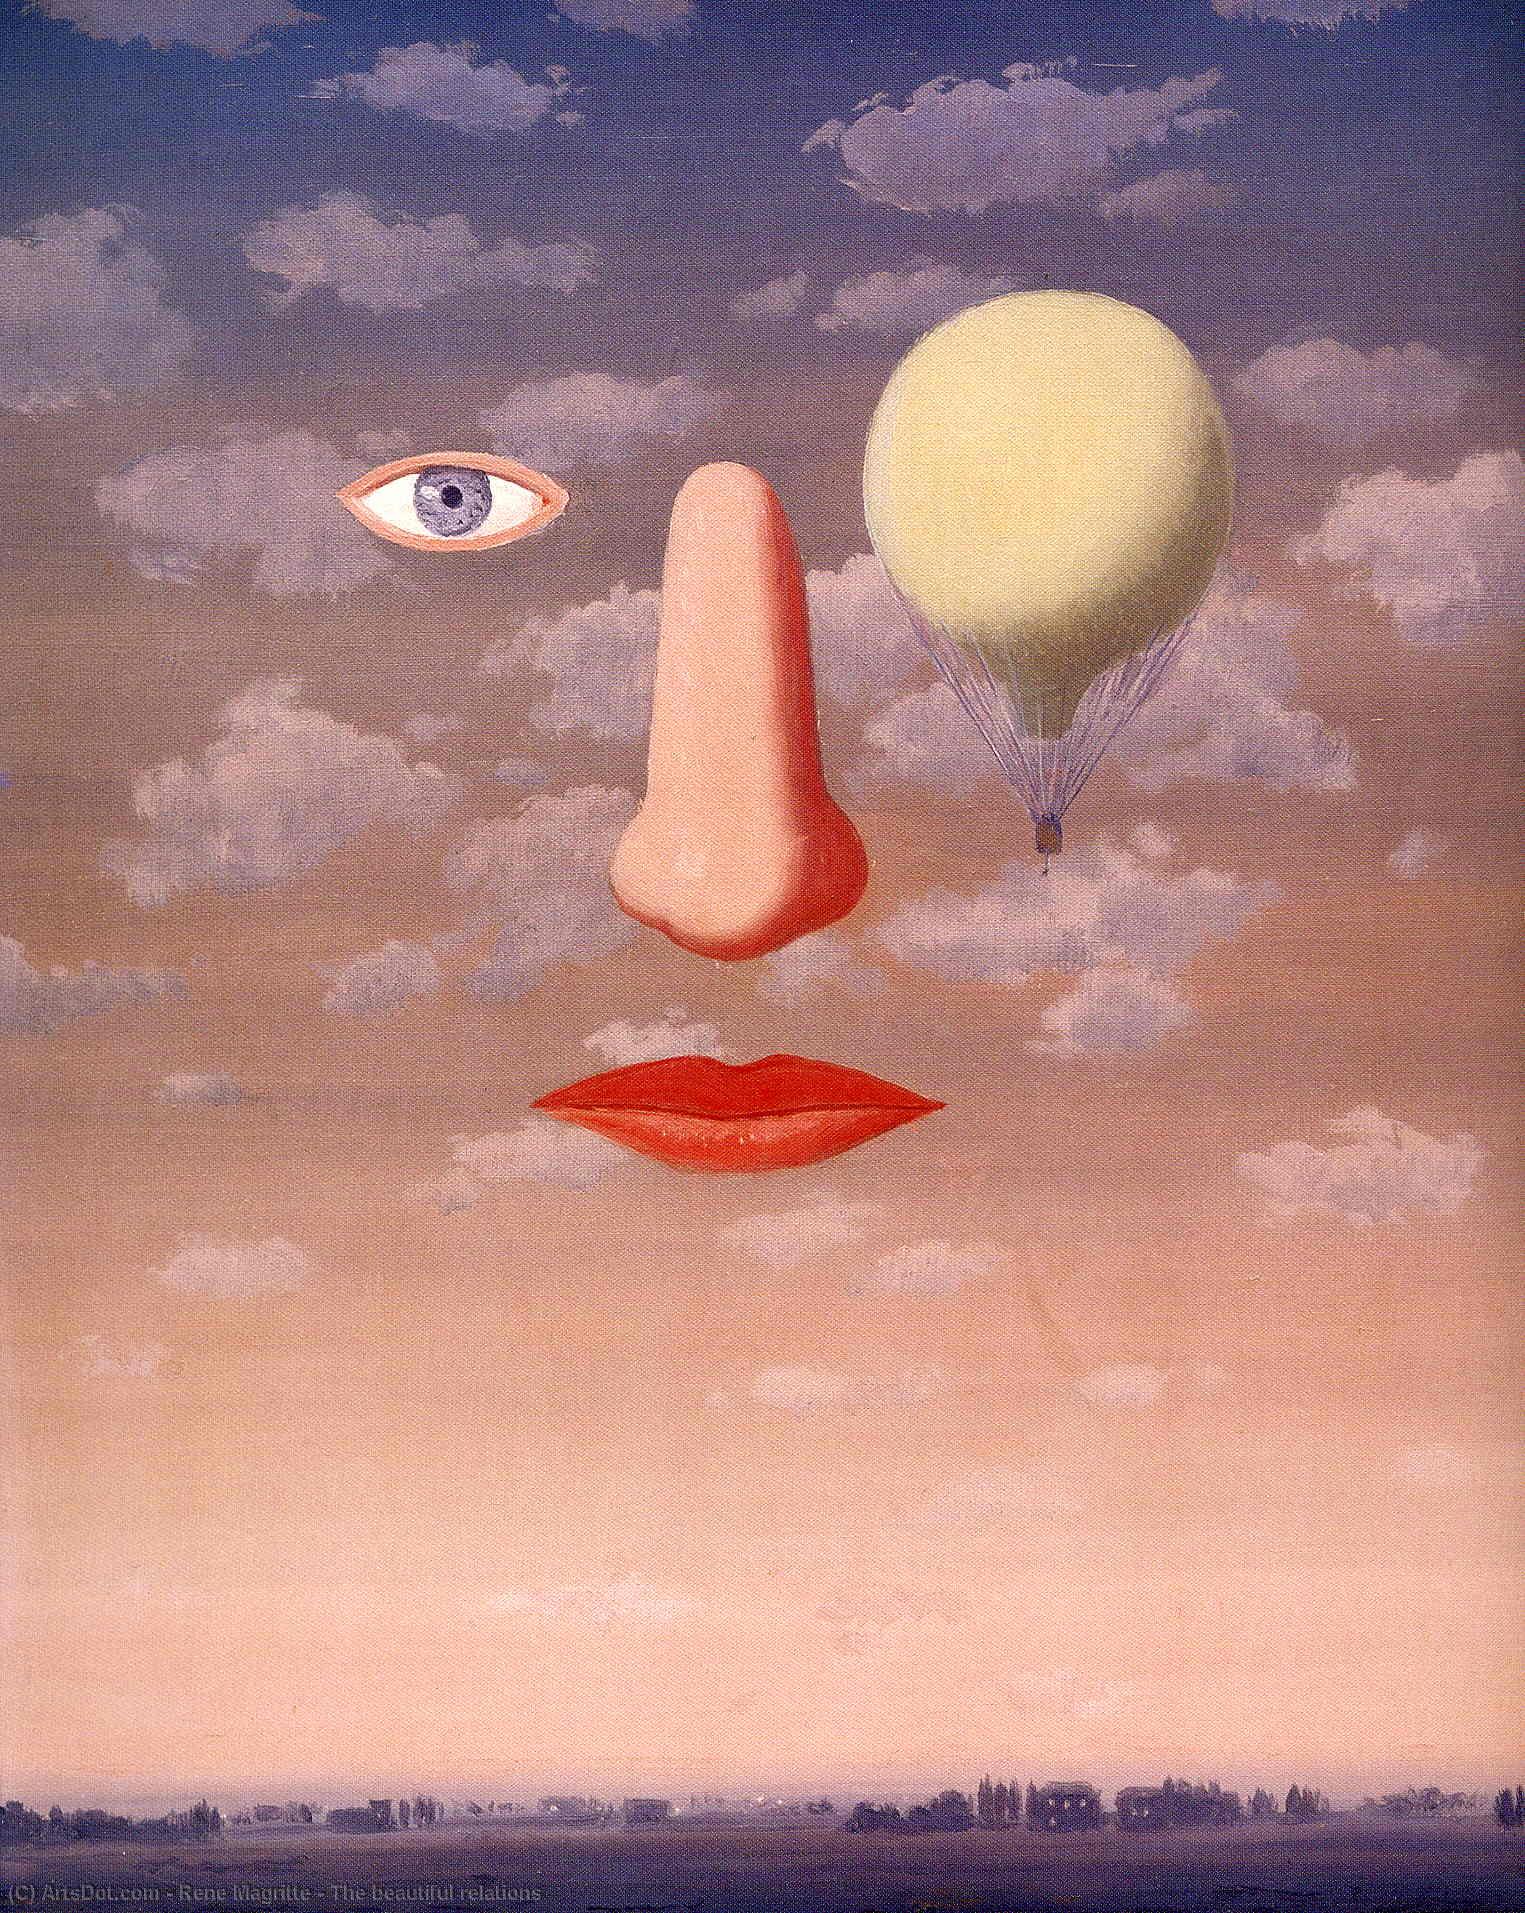 Wikoo.org - موسوعة الفنون الجميلة - اللوحة، العمل الفني Rene Magritte - The beautiful relations